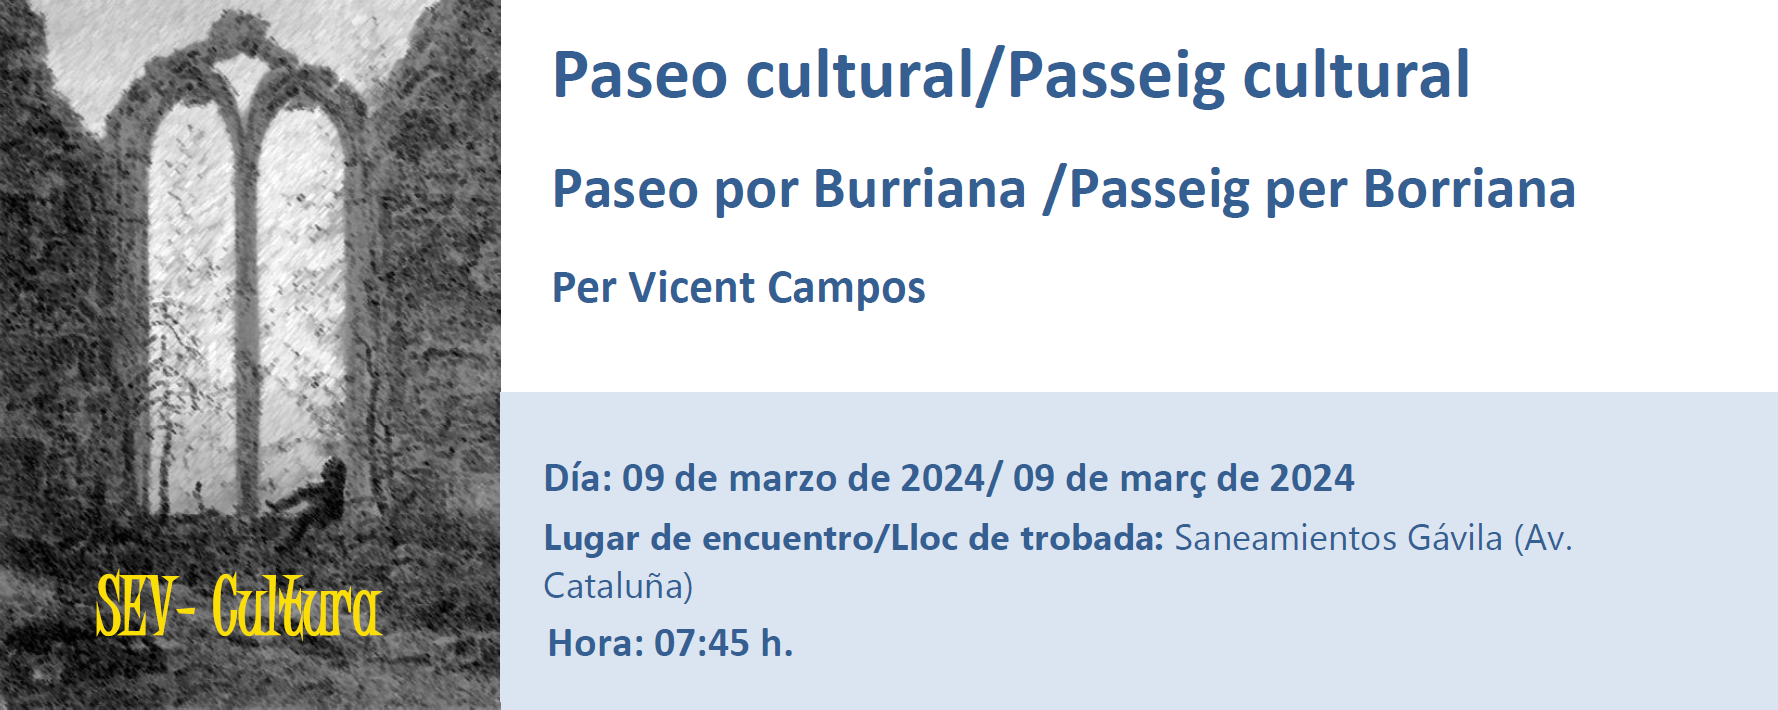 Passeig cultural Passeig per Borriana per Vicent Campos/Paseo Cultura Passeig por Burriana por Vicente Campos